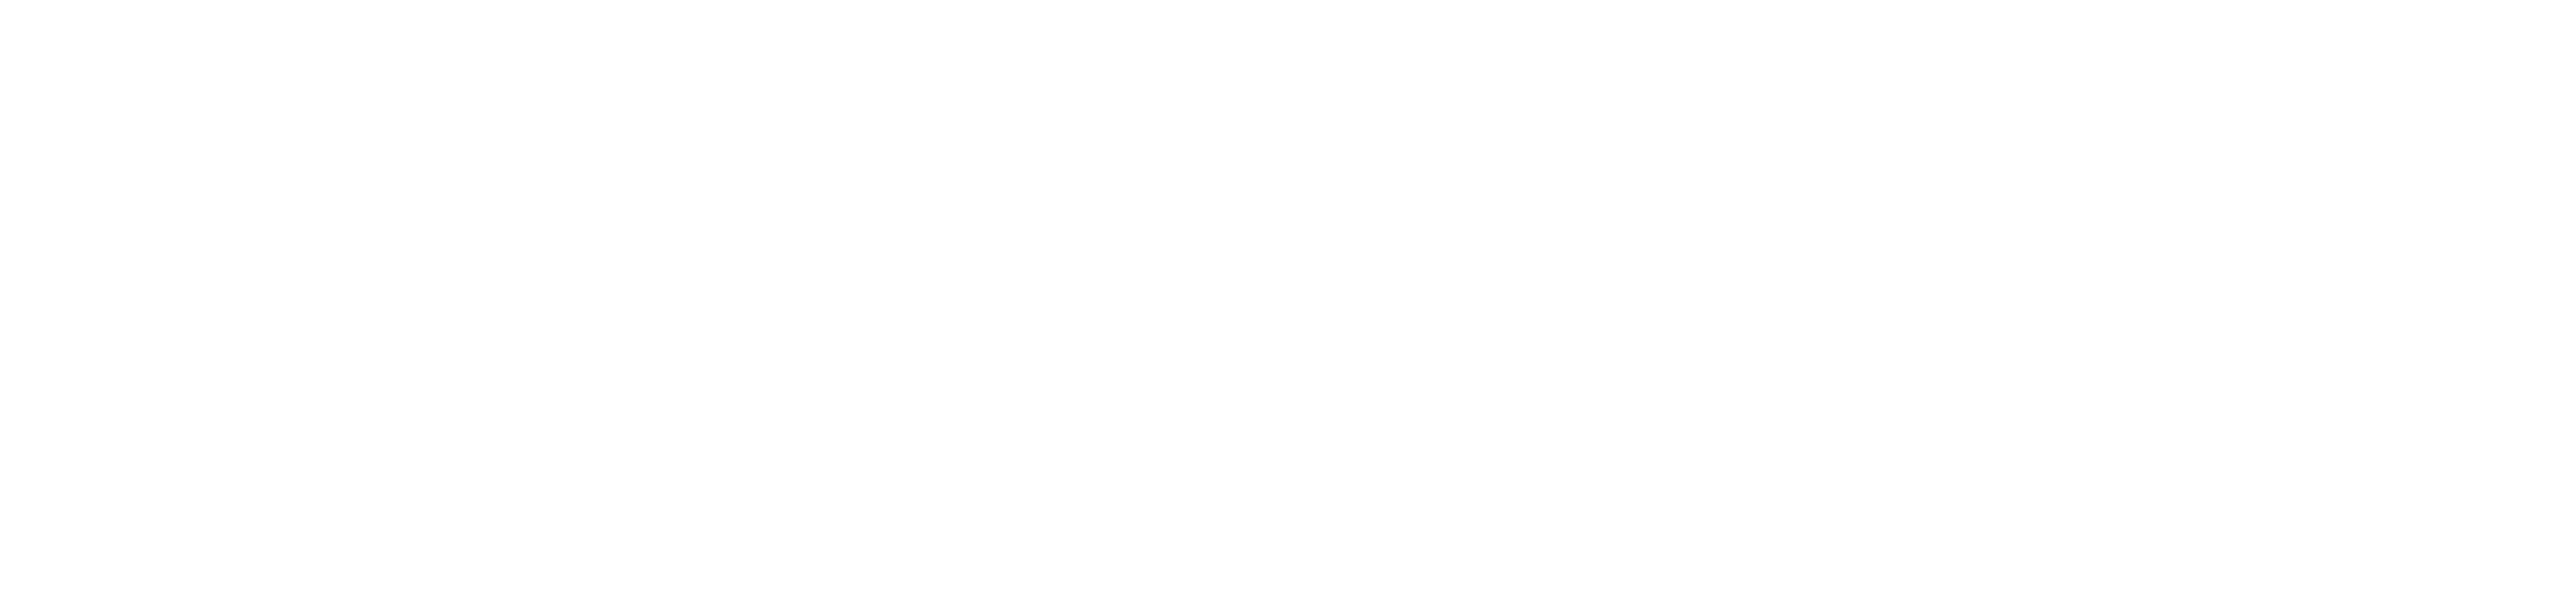 The Effective Executive Leadership Program